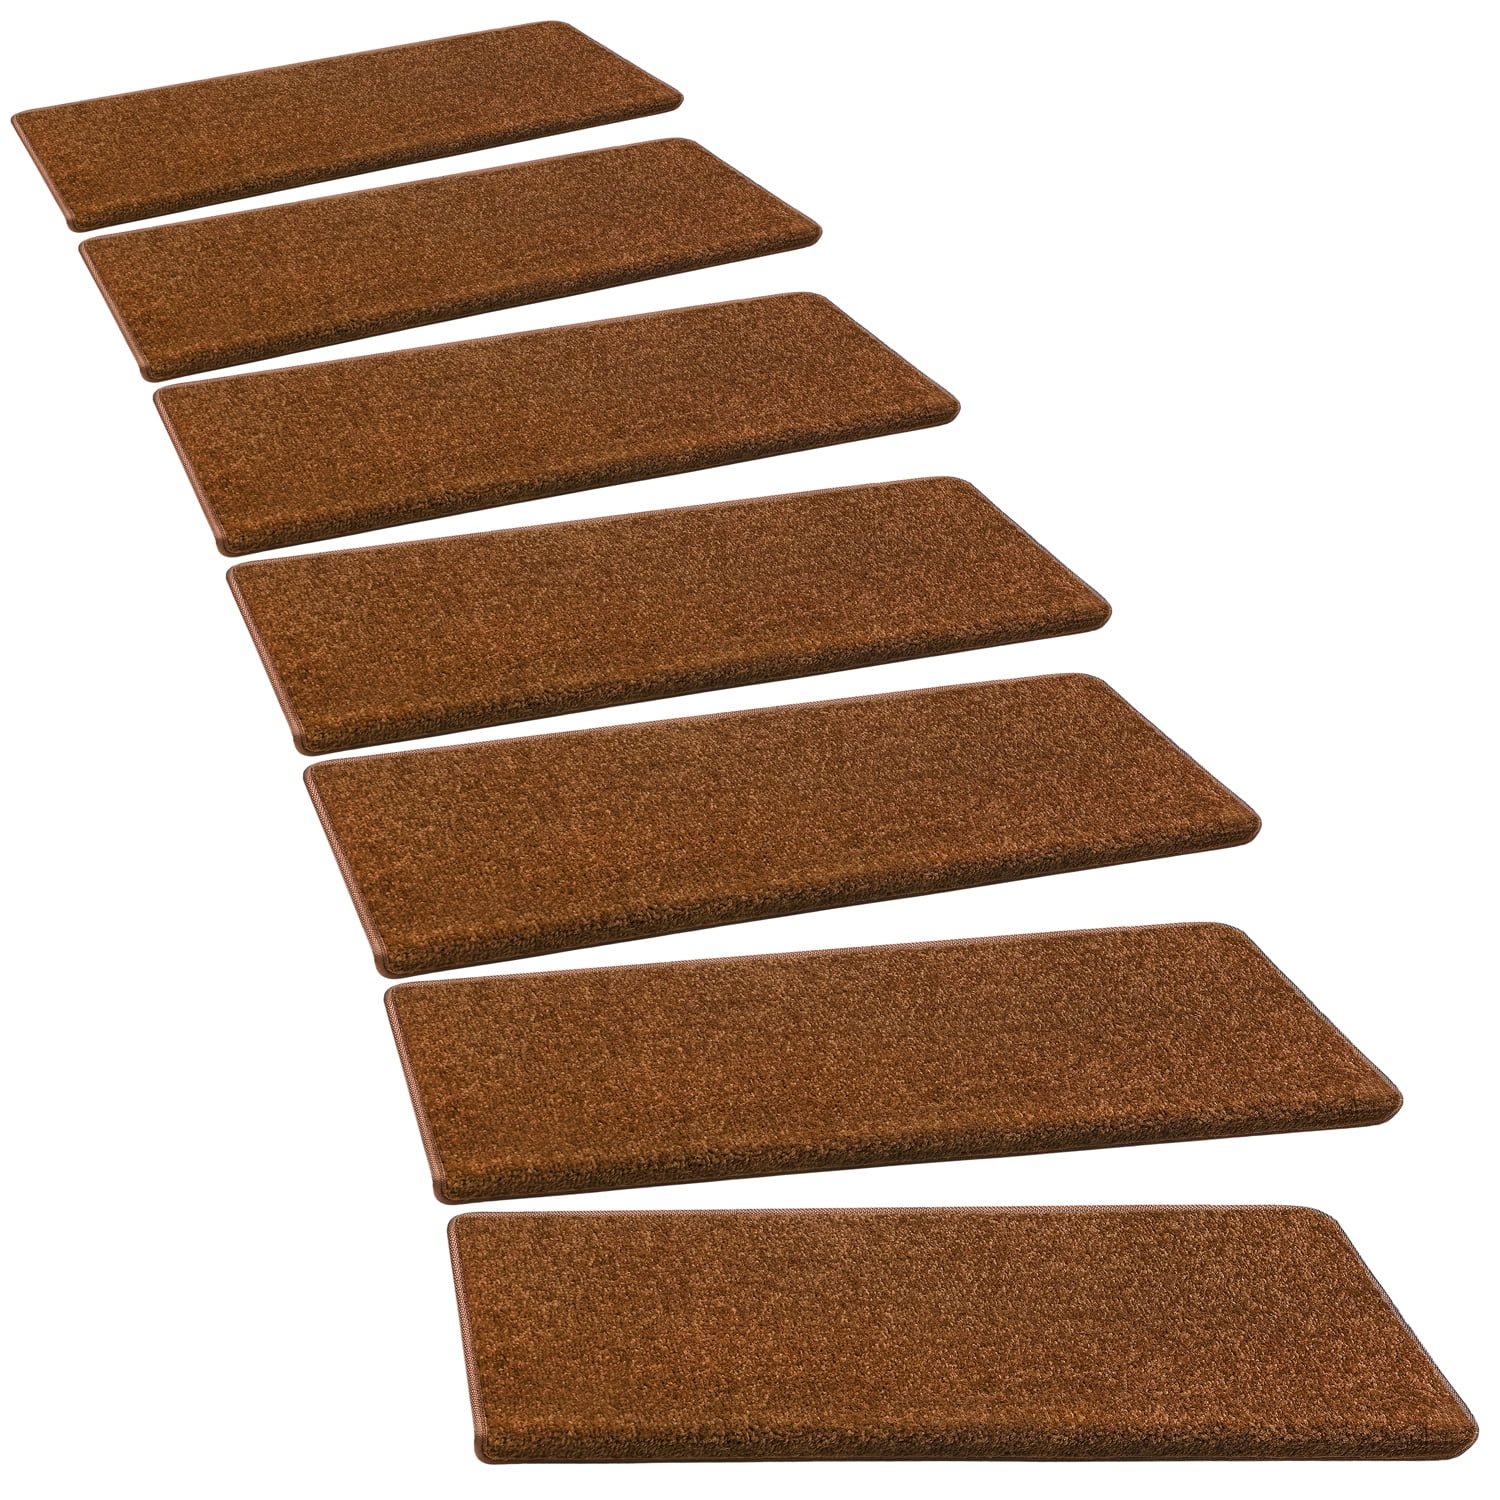 16 pcs Non-Slip Quality Carpet Stair Treads FREE SHIPPING 